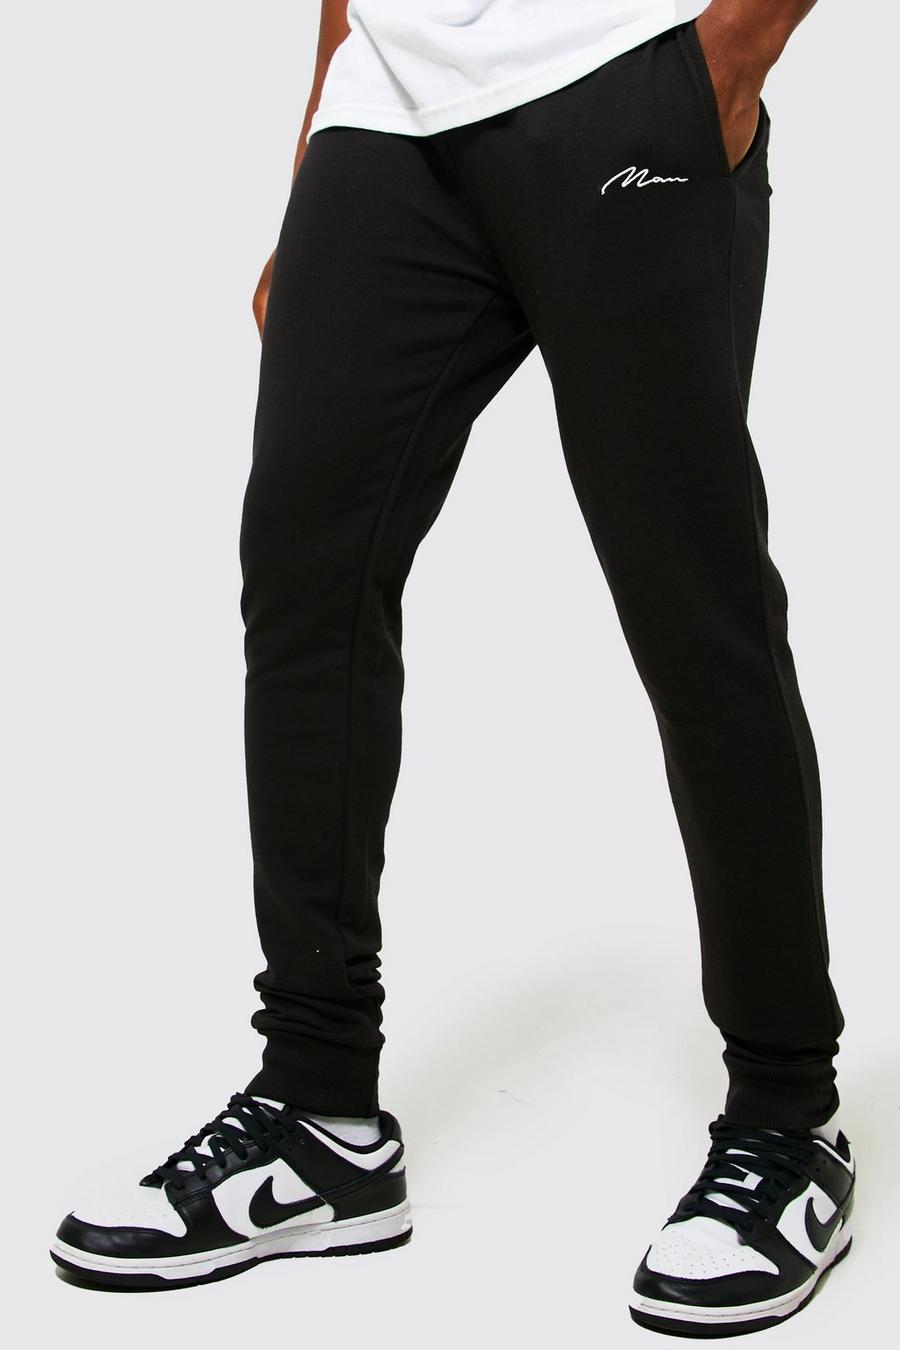 Pantaloni tuta Super Skinny Fit con firma Man, Black nero